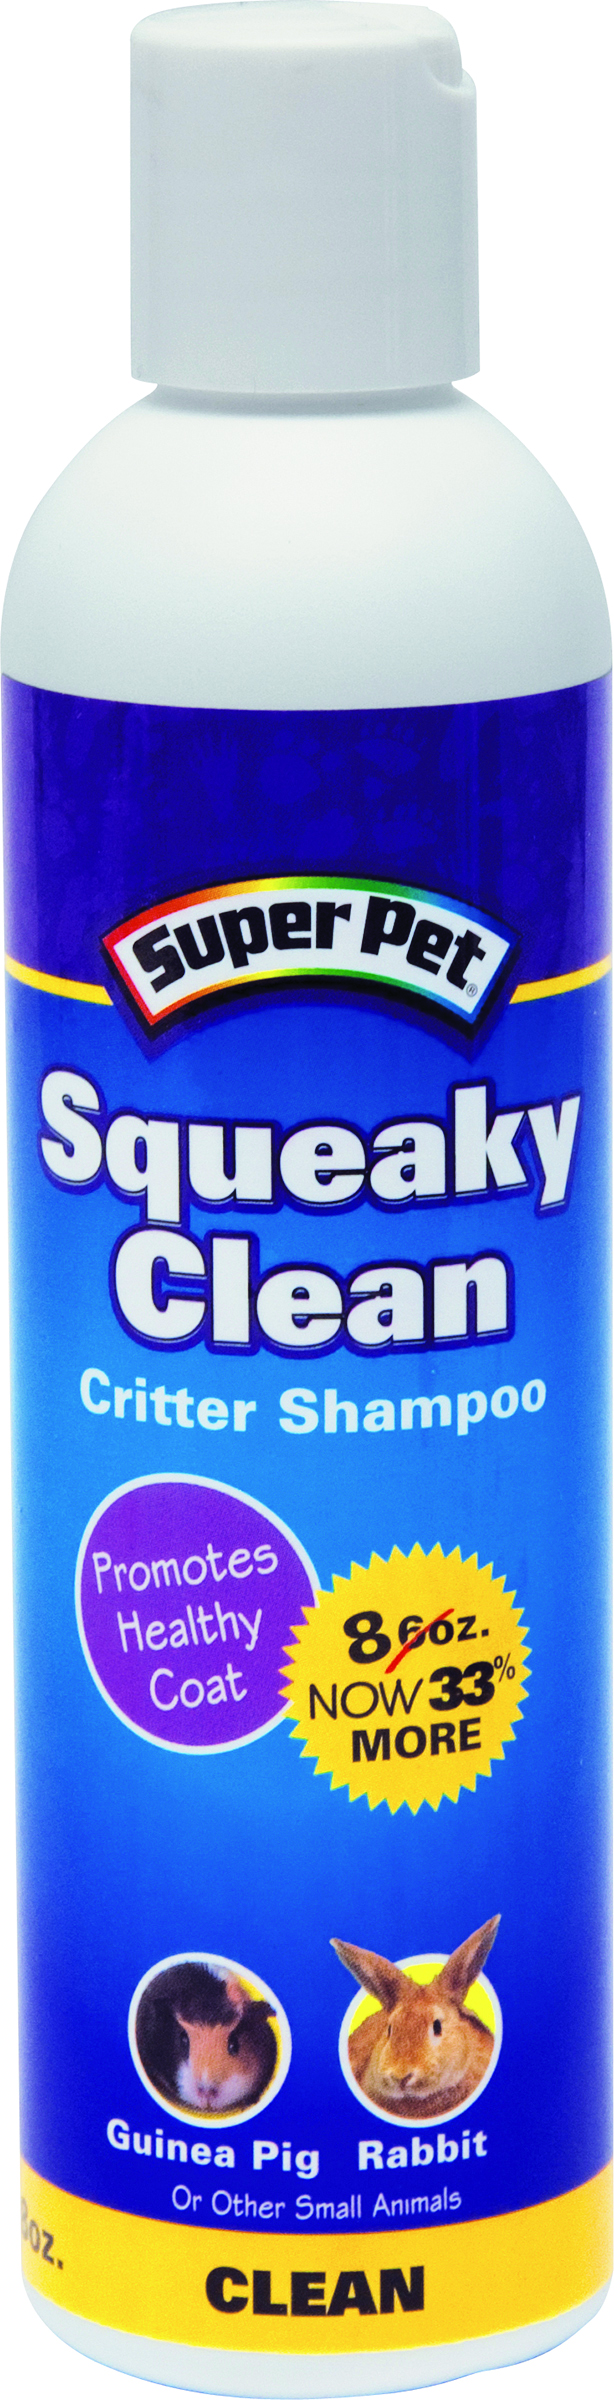 Squeaky Clean Shampoo, Critter